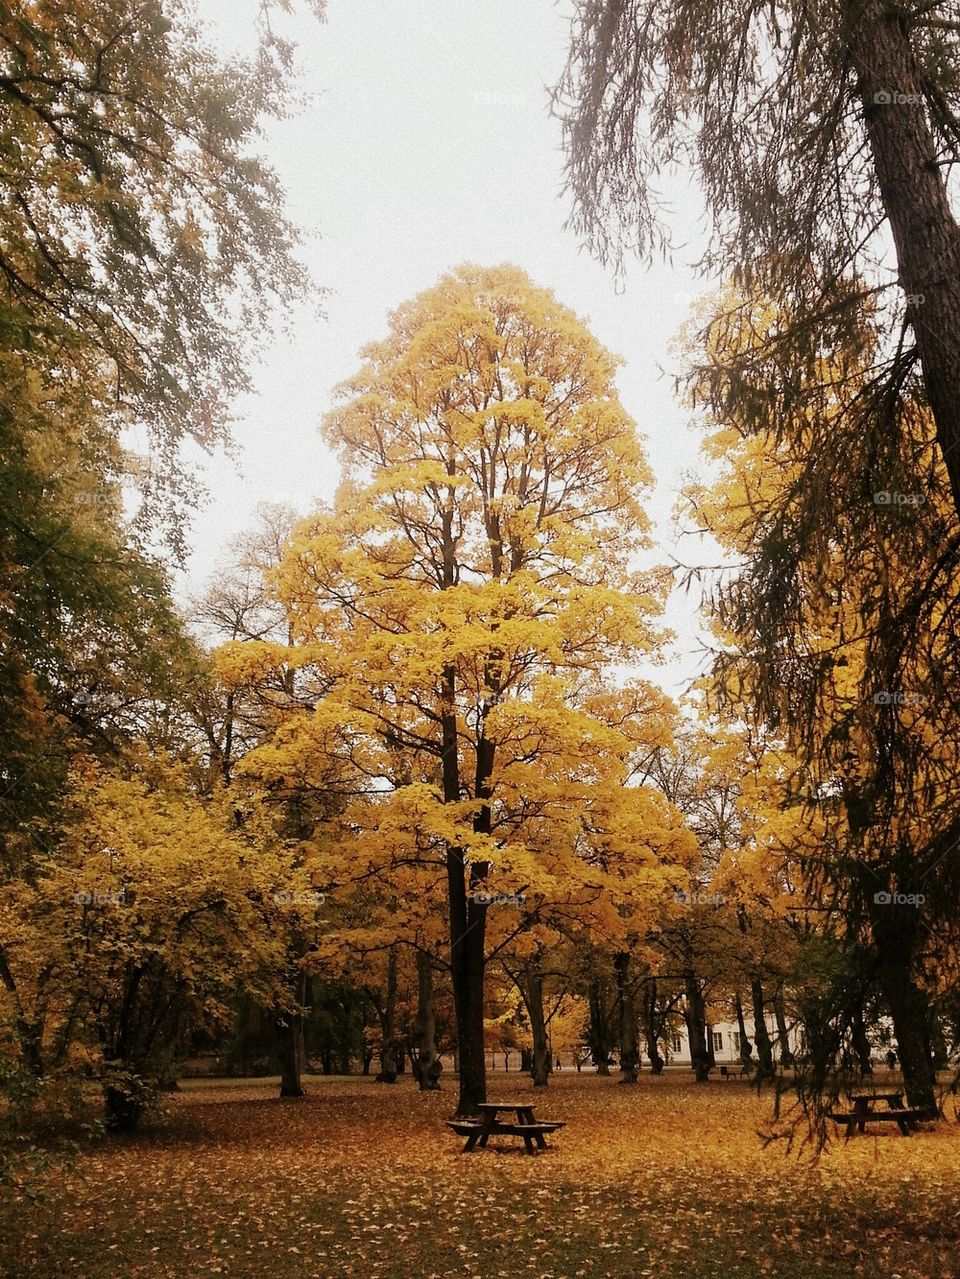 trees in the autumn, Uppsala, Sweden